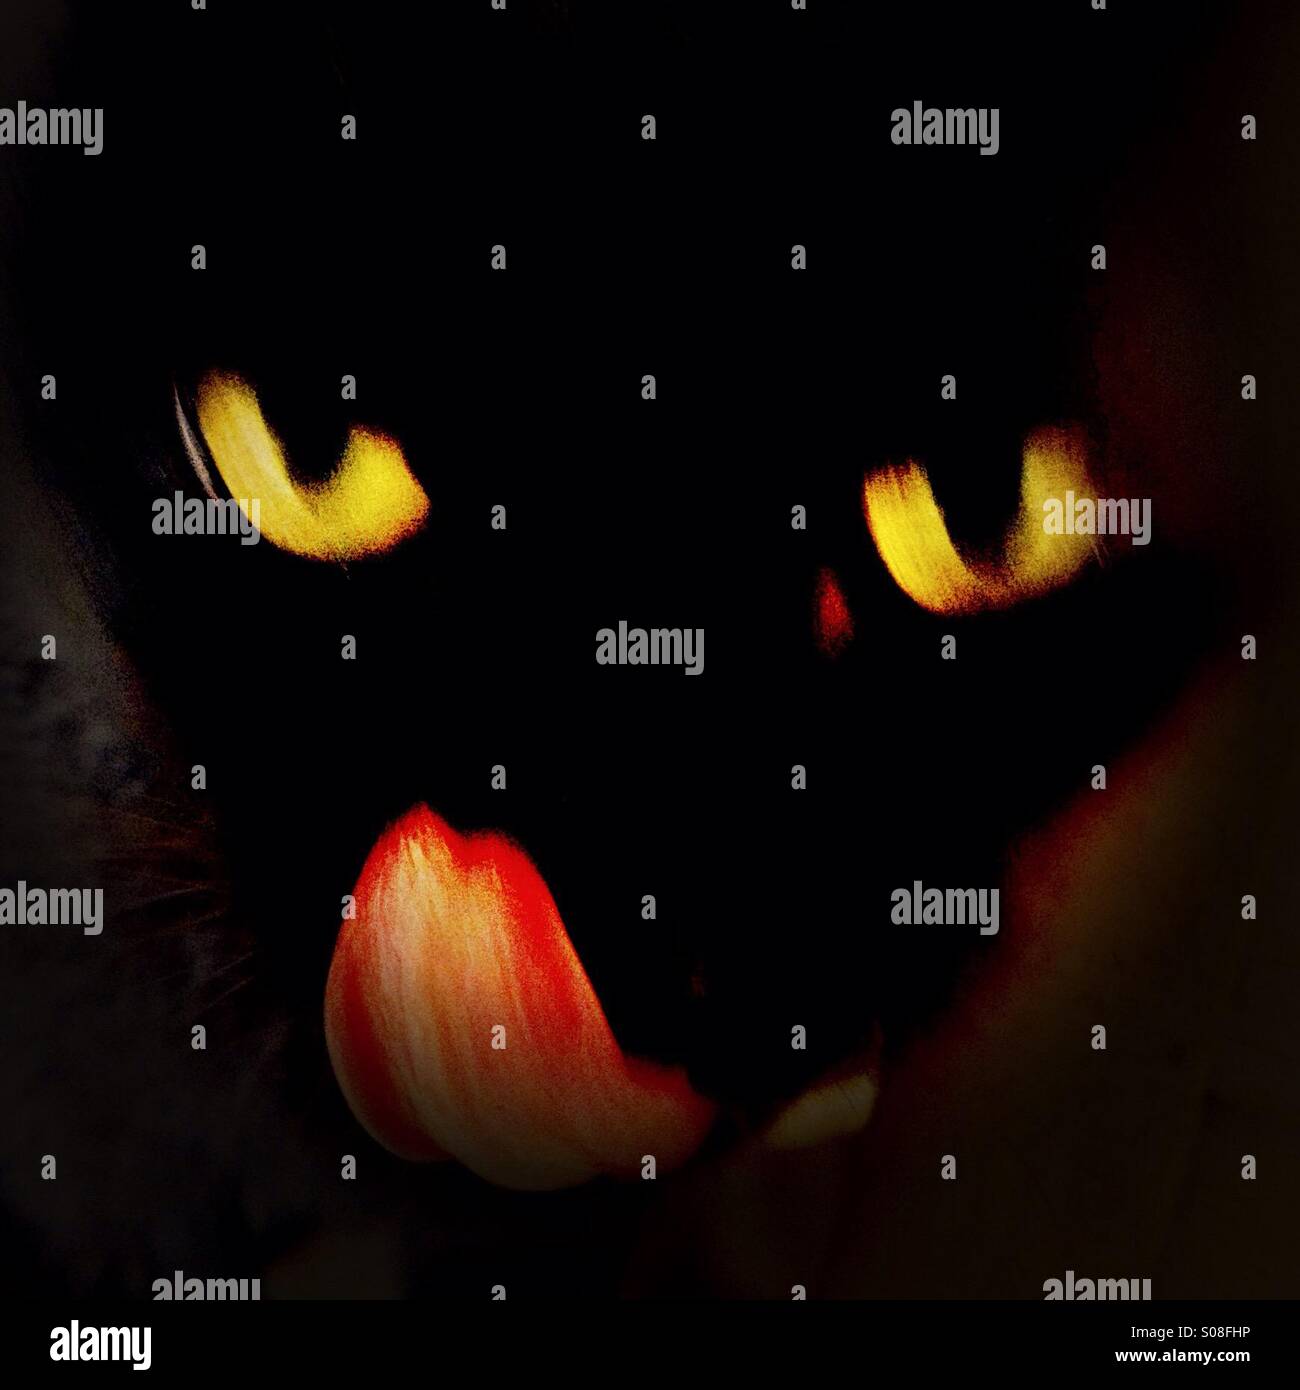 Lengua roja - gato negro caza en la oscuridad - ojos de gato - lengua roja - ojos amarillos Foto de stock